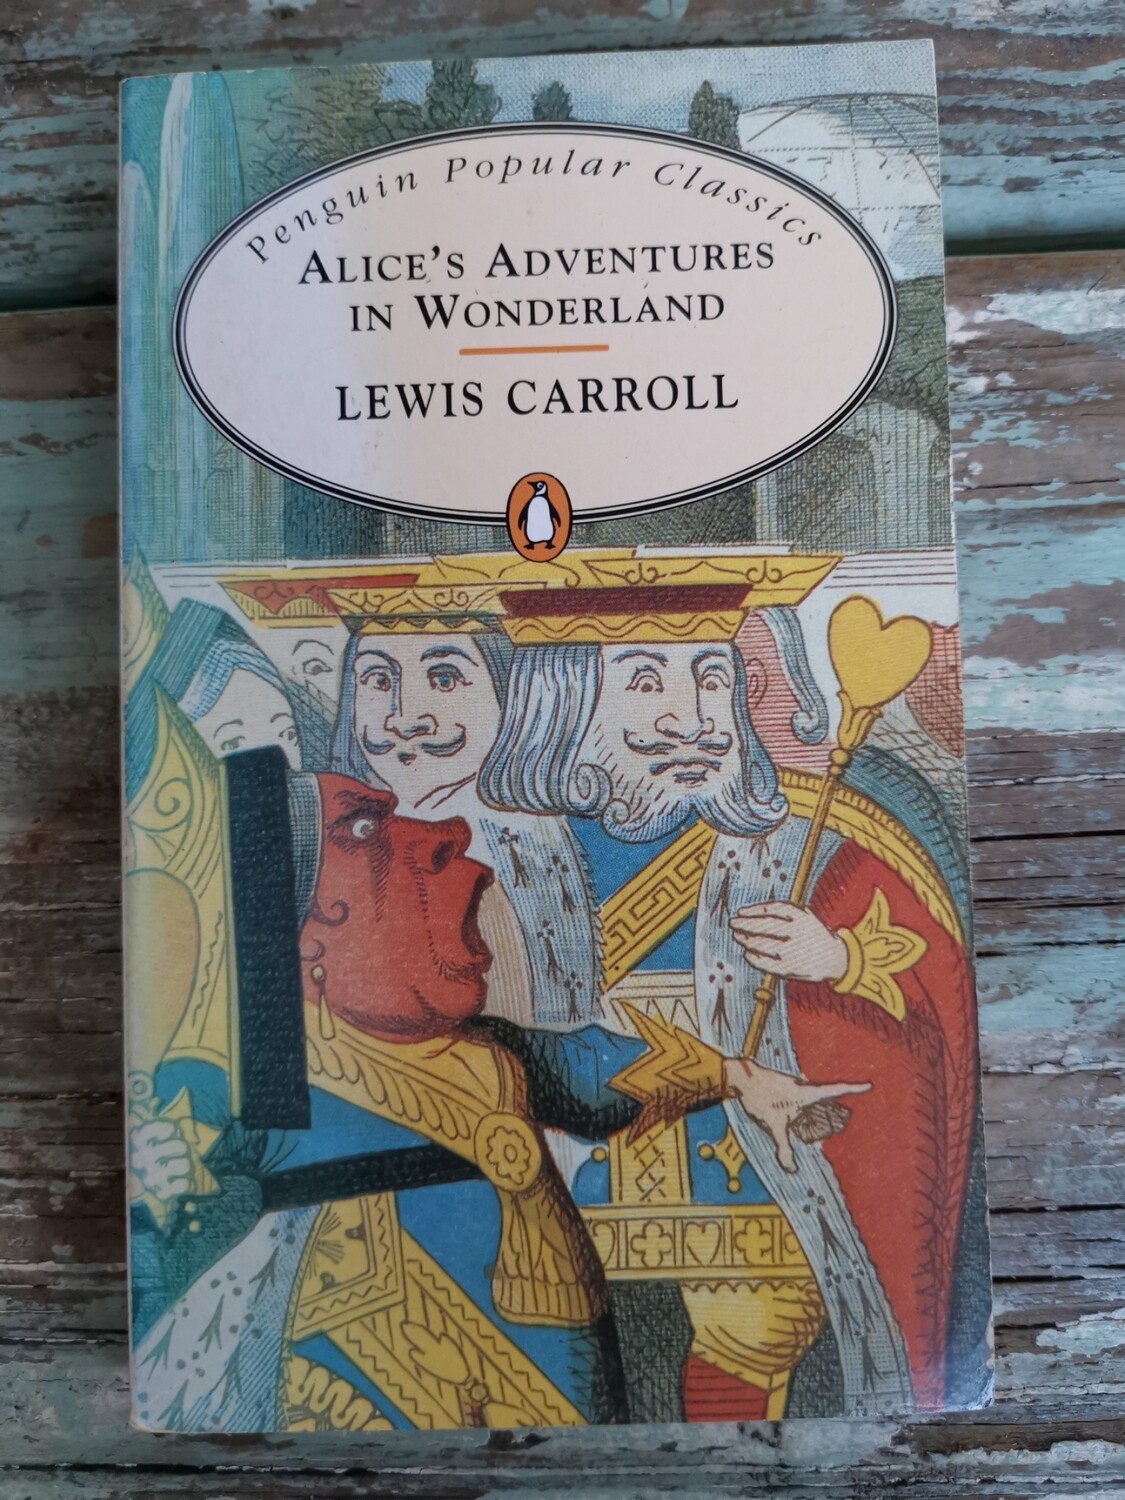 Alice's adventures in wonderland, Lewis Caroll